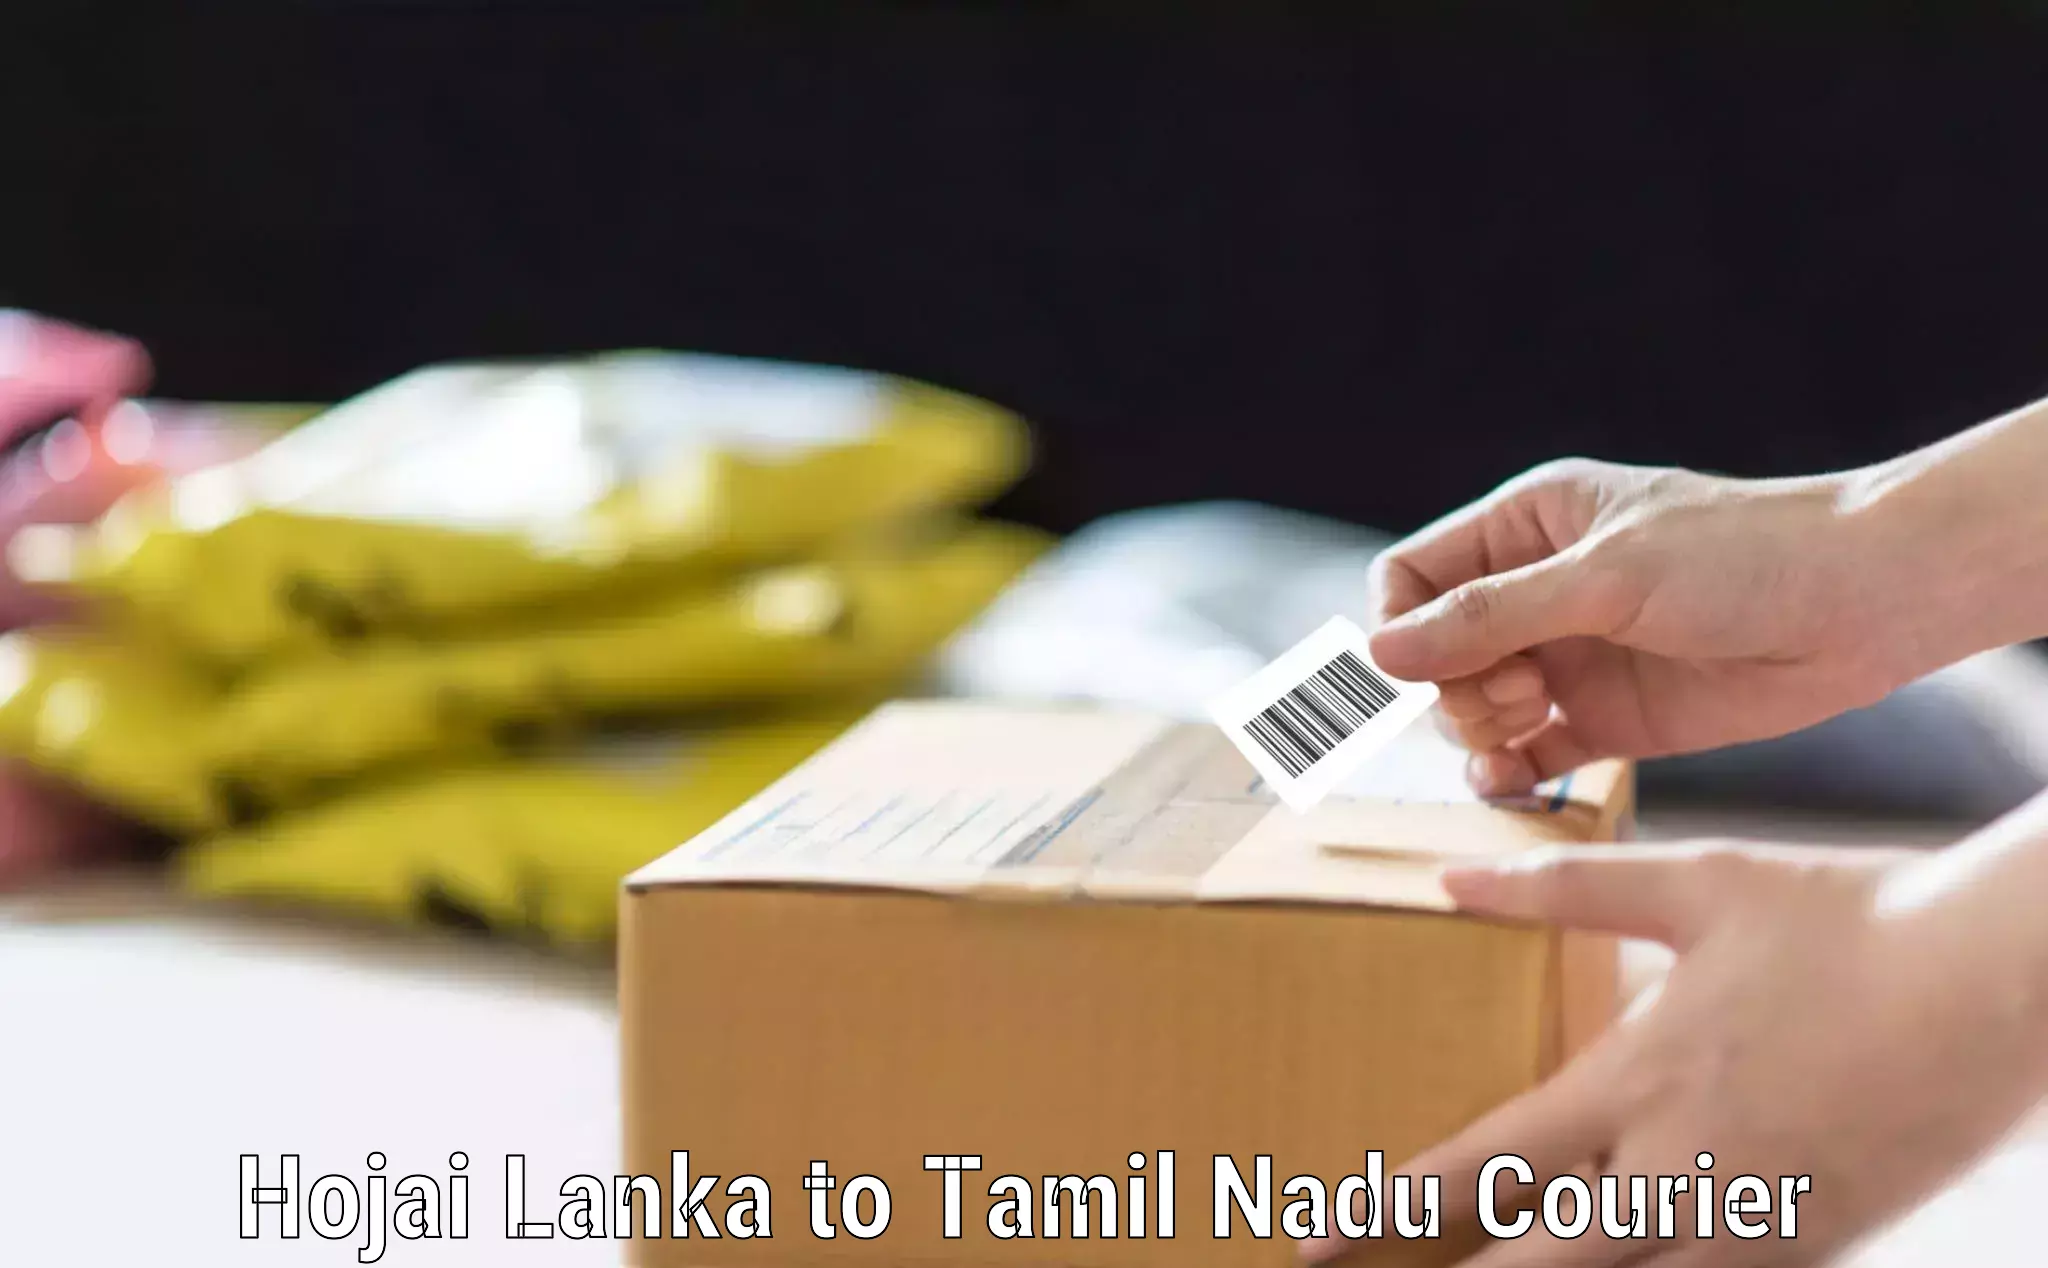 Instant baggage transport quote Hojai Lanka to Tamil Nadu